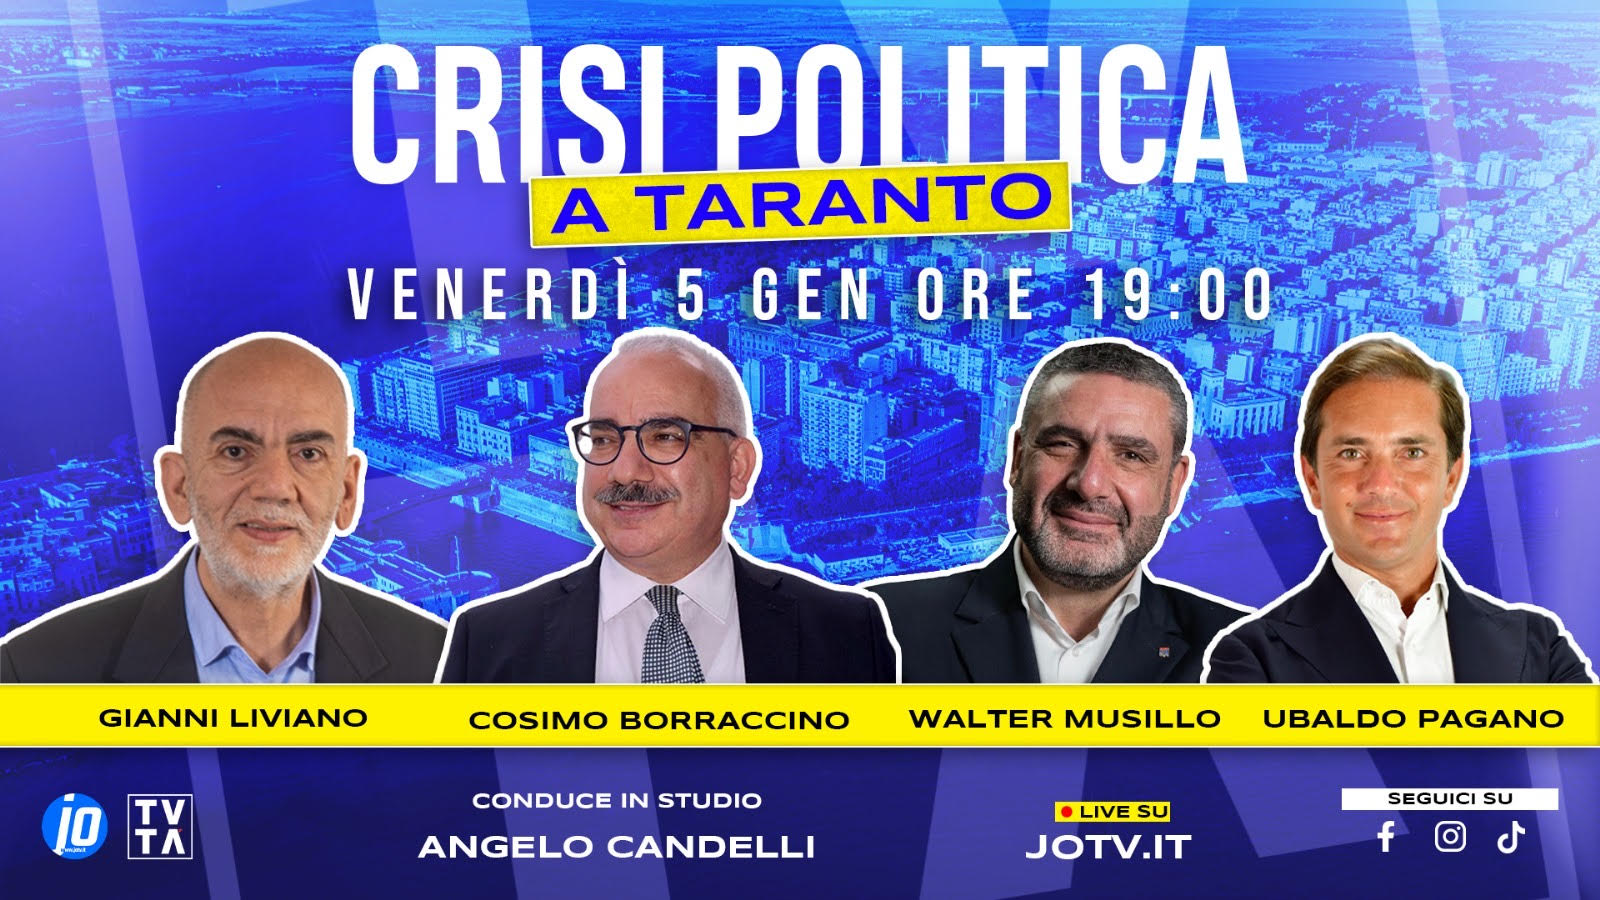 Crisi politica a Taranto, se ne parla stasera su JoTv